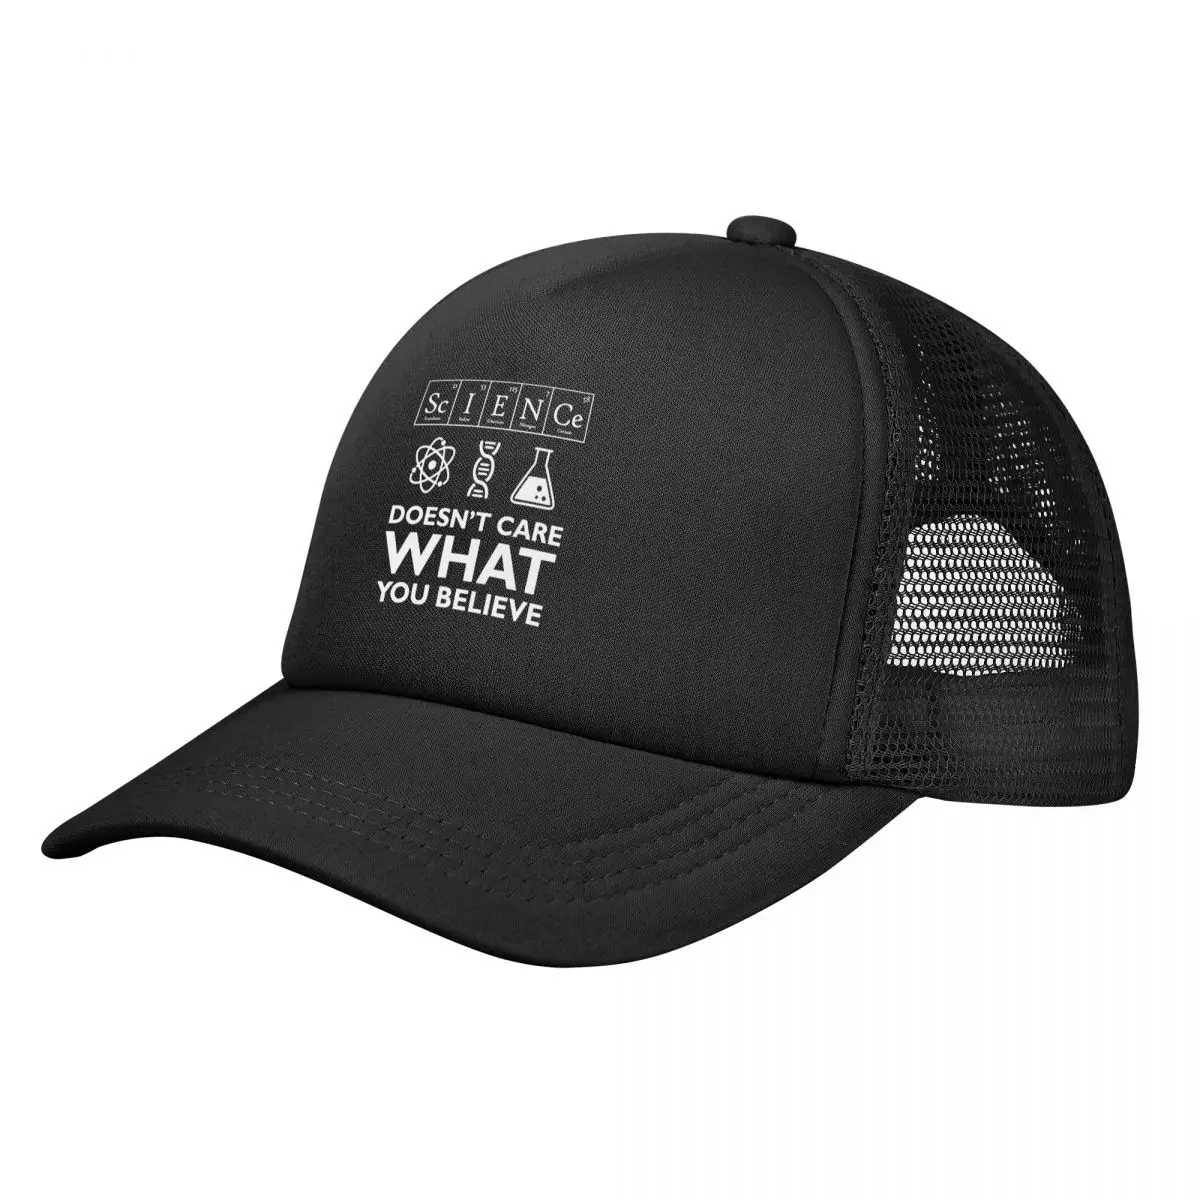 

Science Doesn't Care What You Believe Mesh Baseball Cap Outdoor Sun Hat Adjustable Snapback Caps Racing Cap Trucker Hat